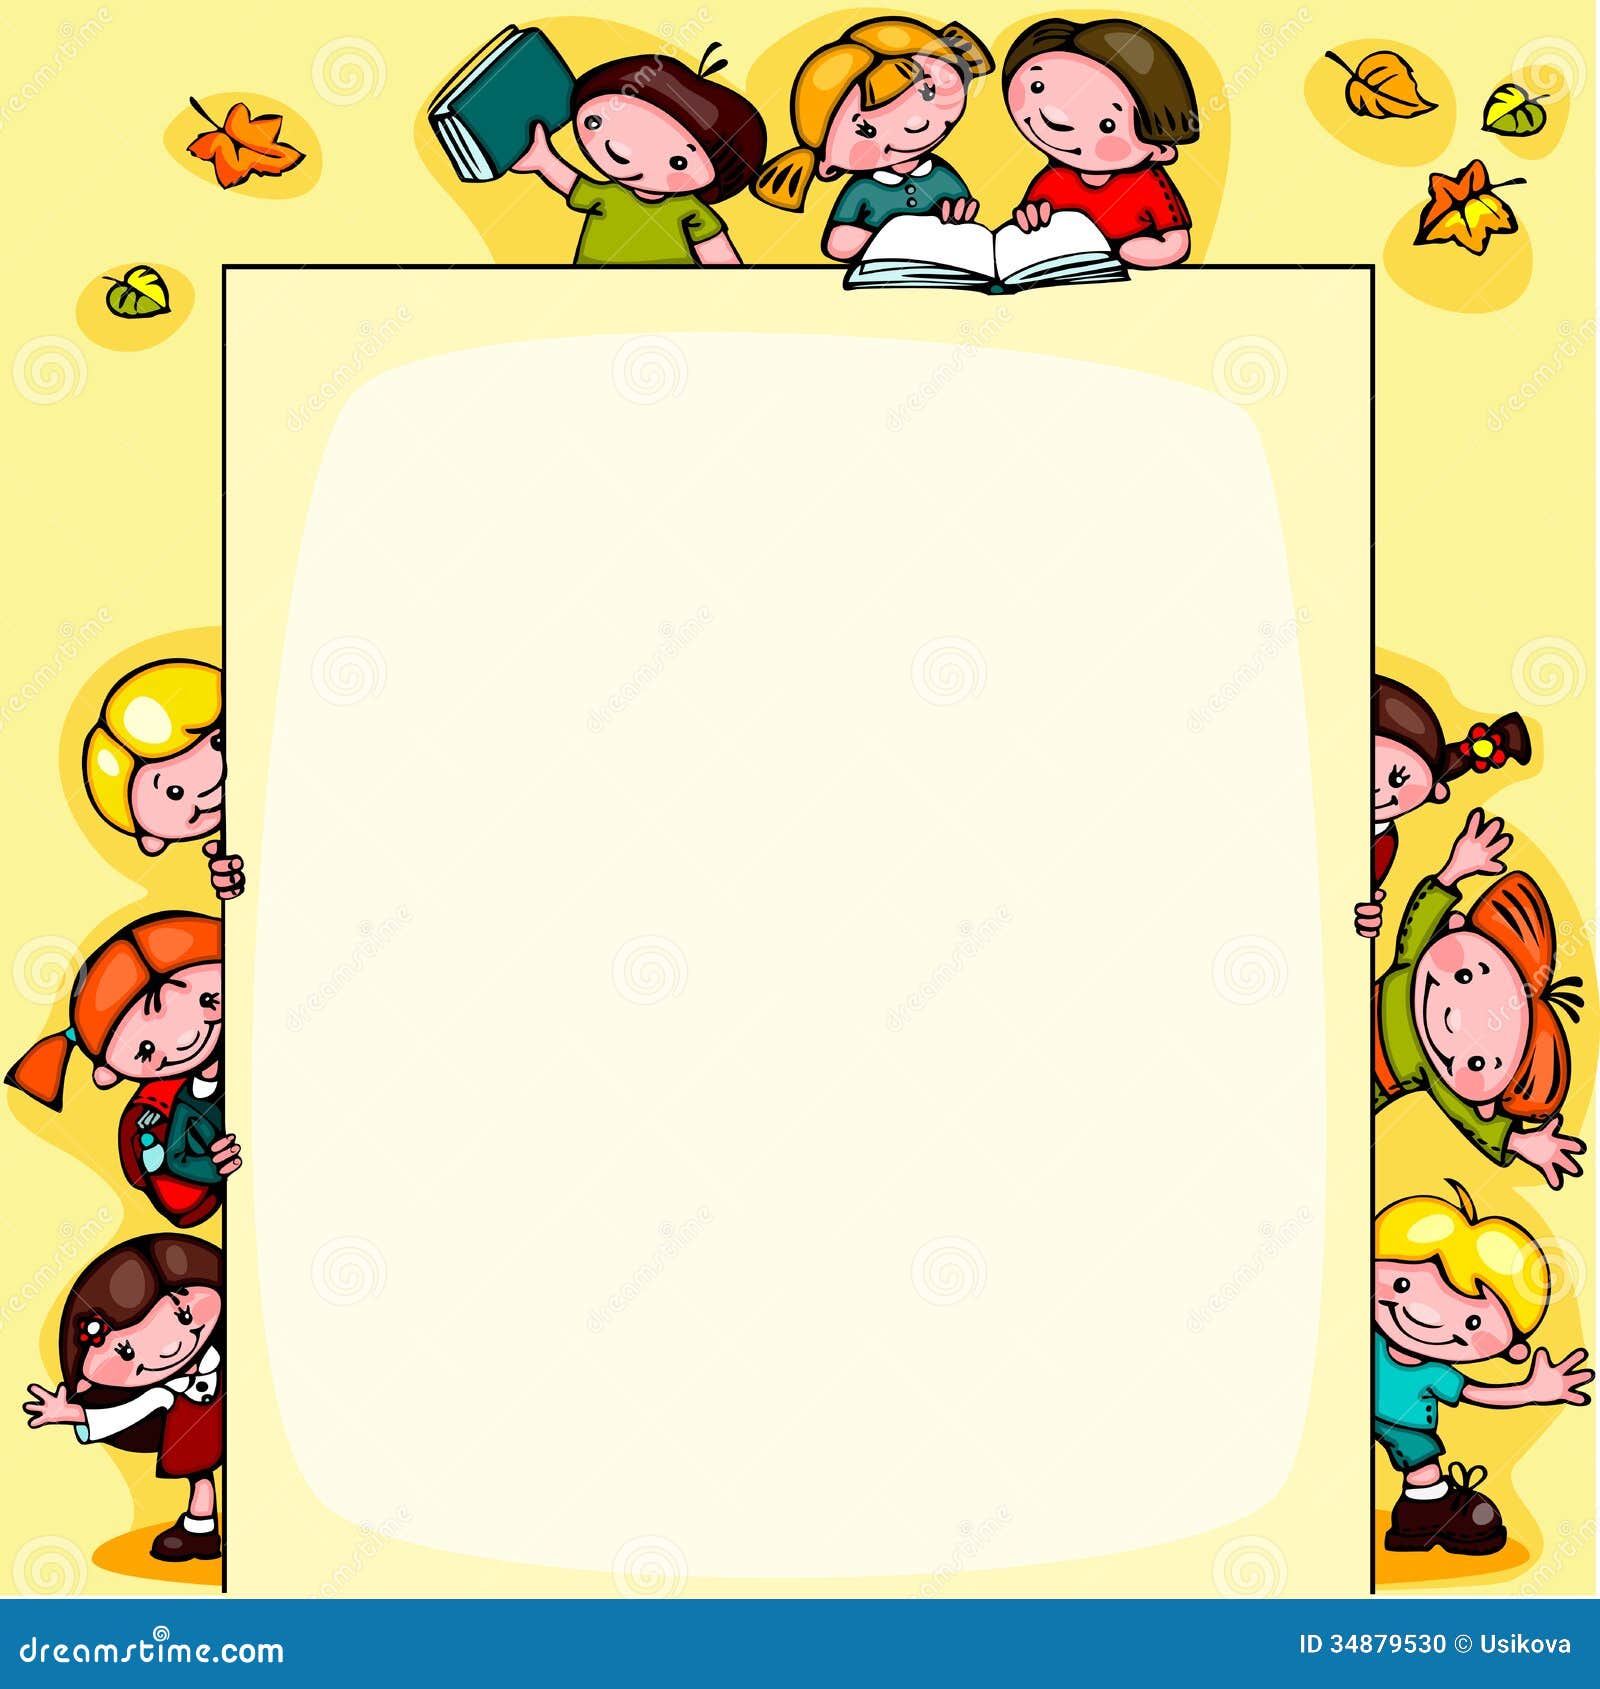 Kids school background stock vector. Illustration of invitation - 34879530